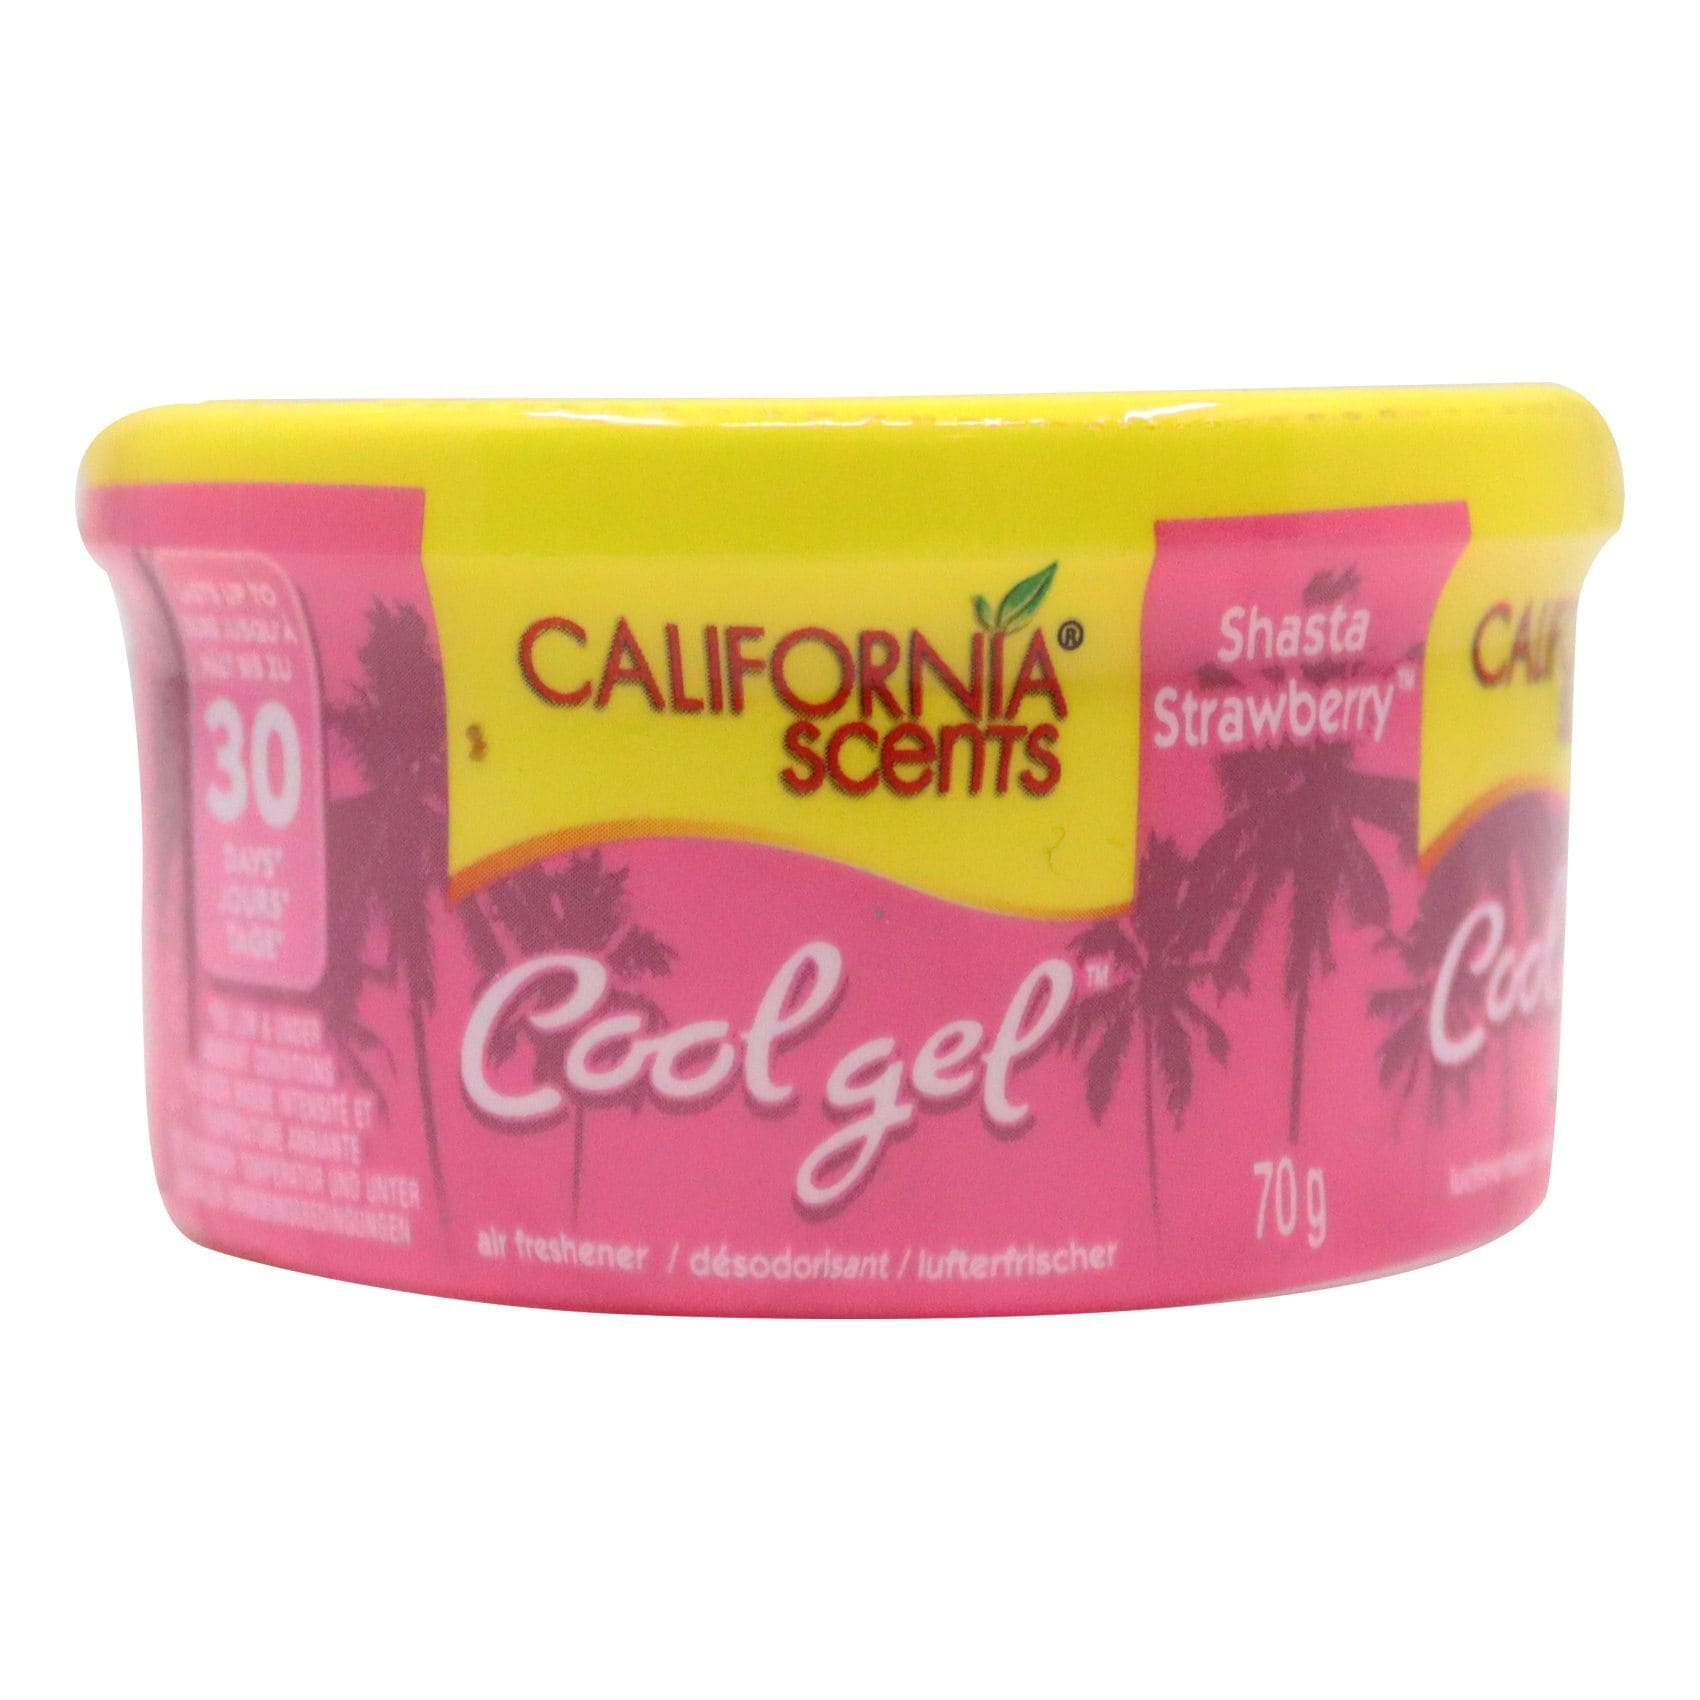 California Scents Car Scents Shasta Strawberry Cool Gel Air Freshener